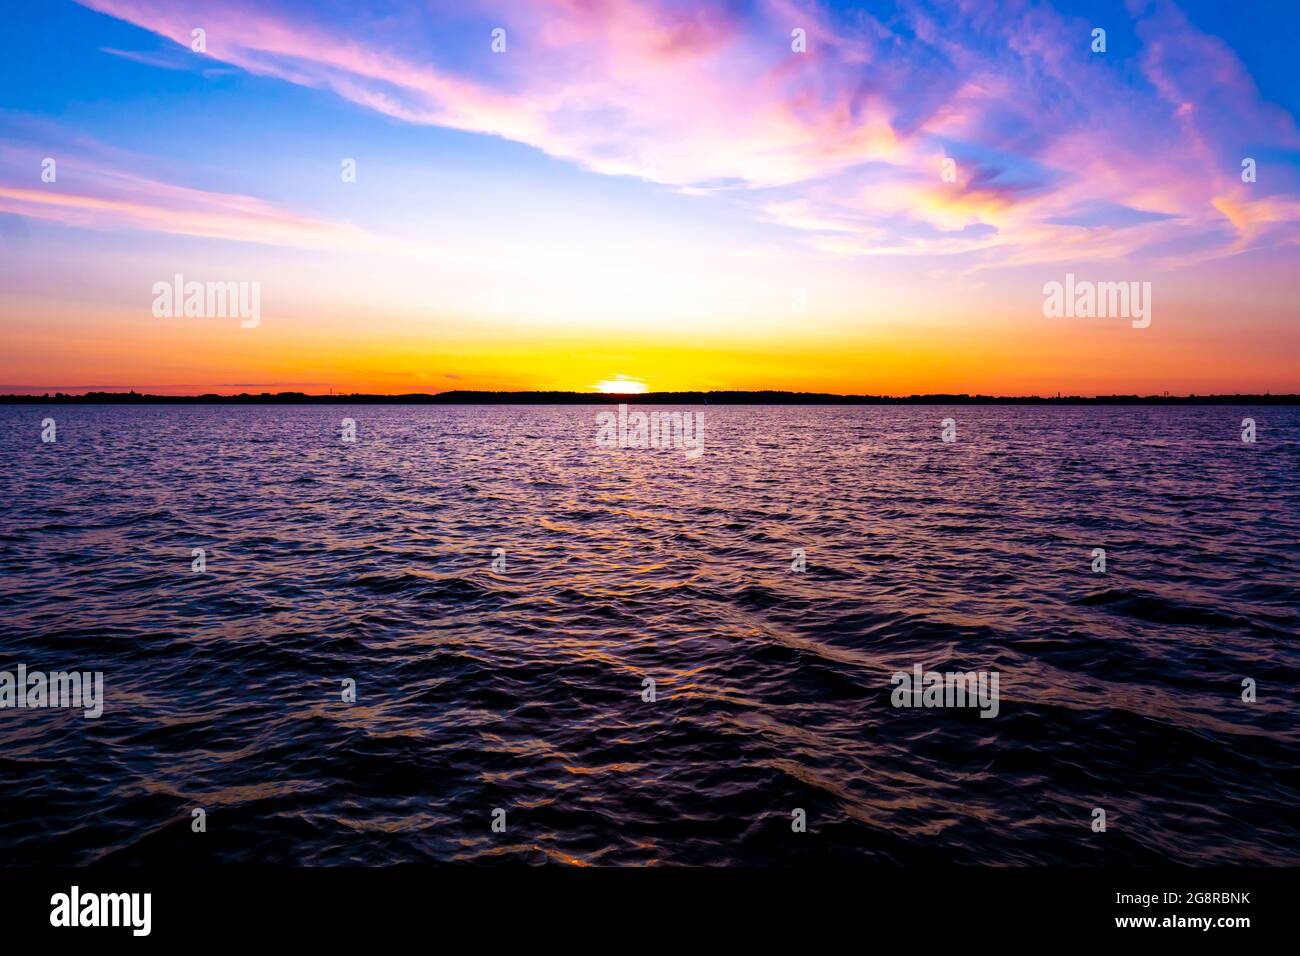 Bright beautiful sunrise or sunset at sea. Stock Photo